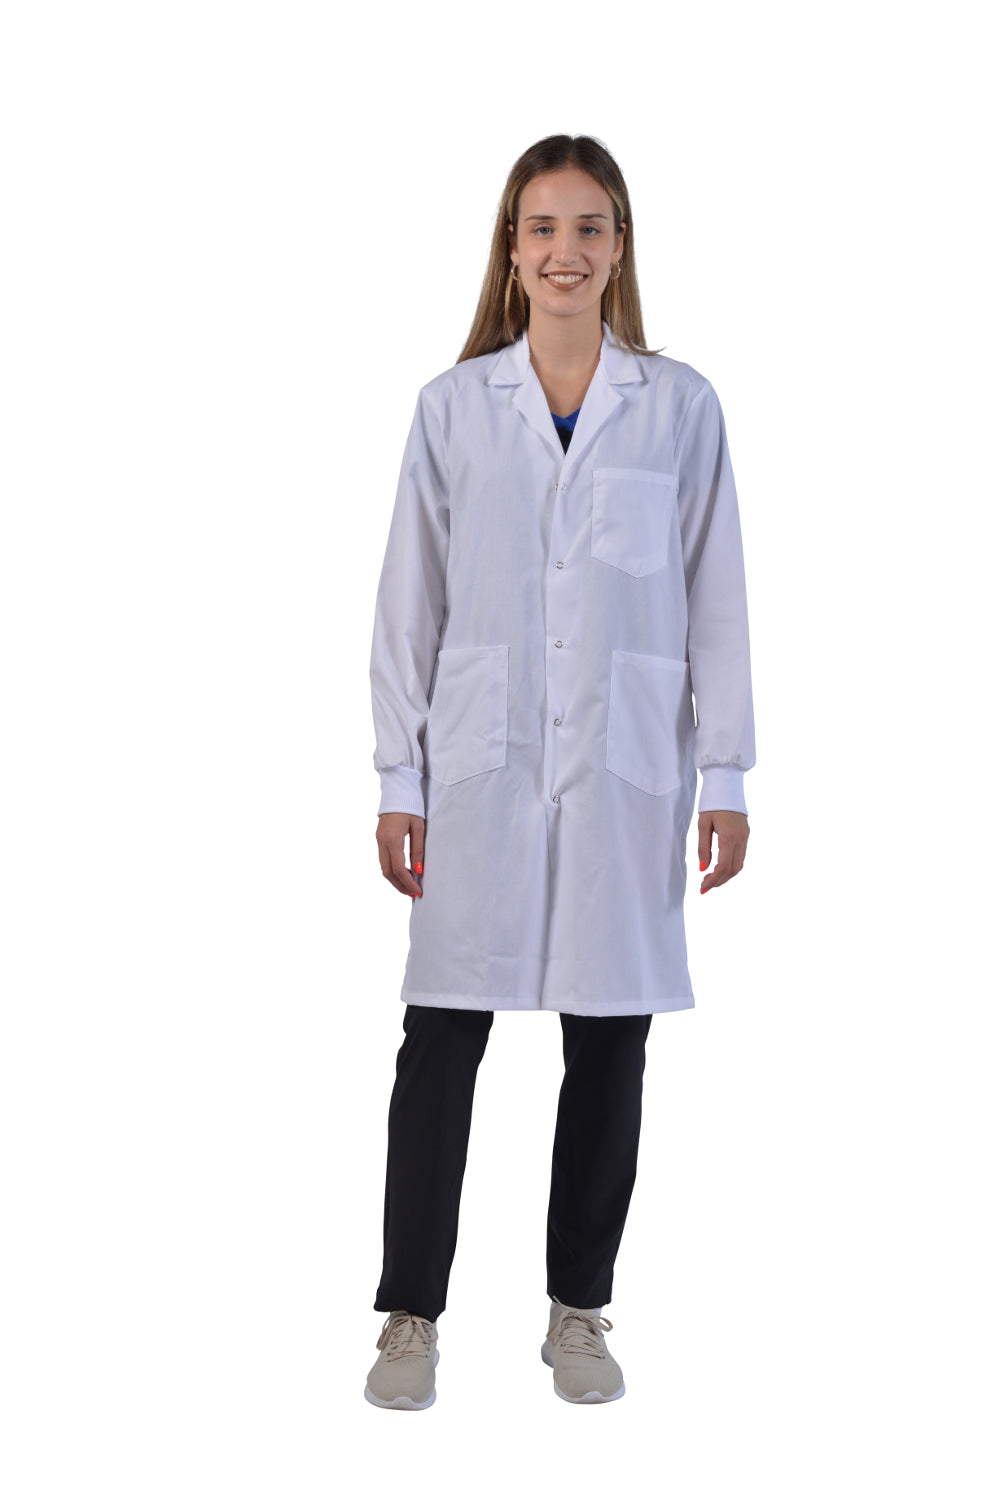 White - Avida Lab Coats 42" Unisex Lab Coat with Knit Cuffs